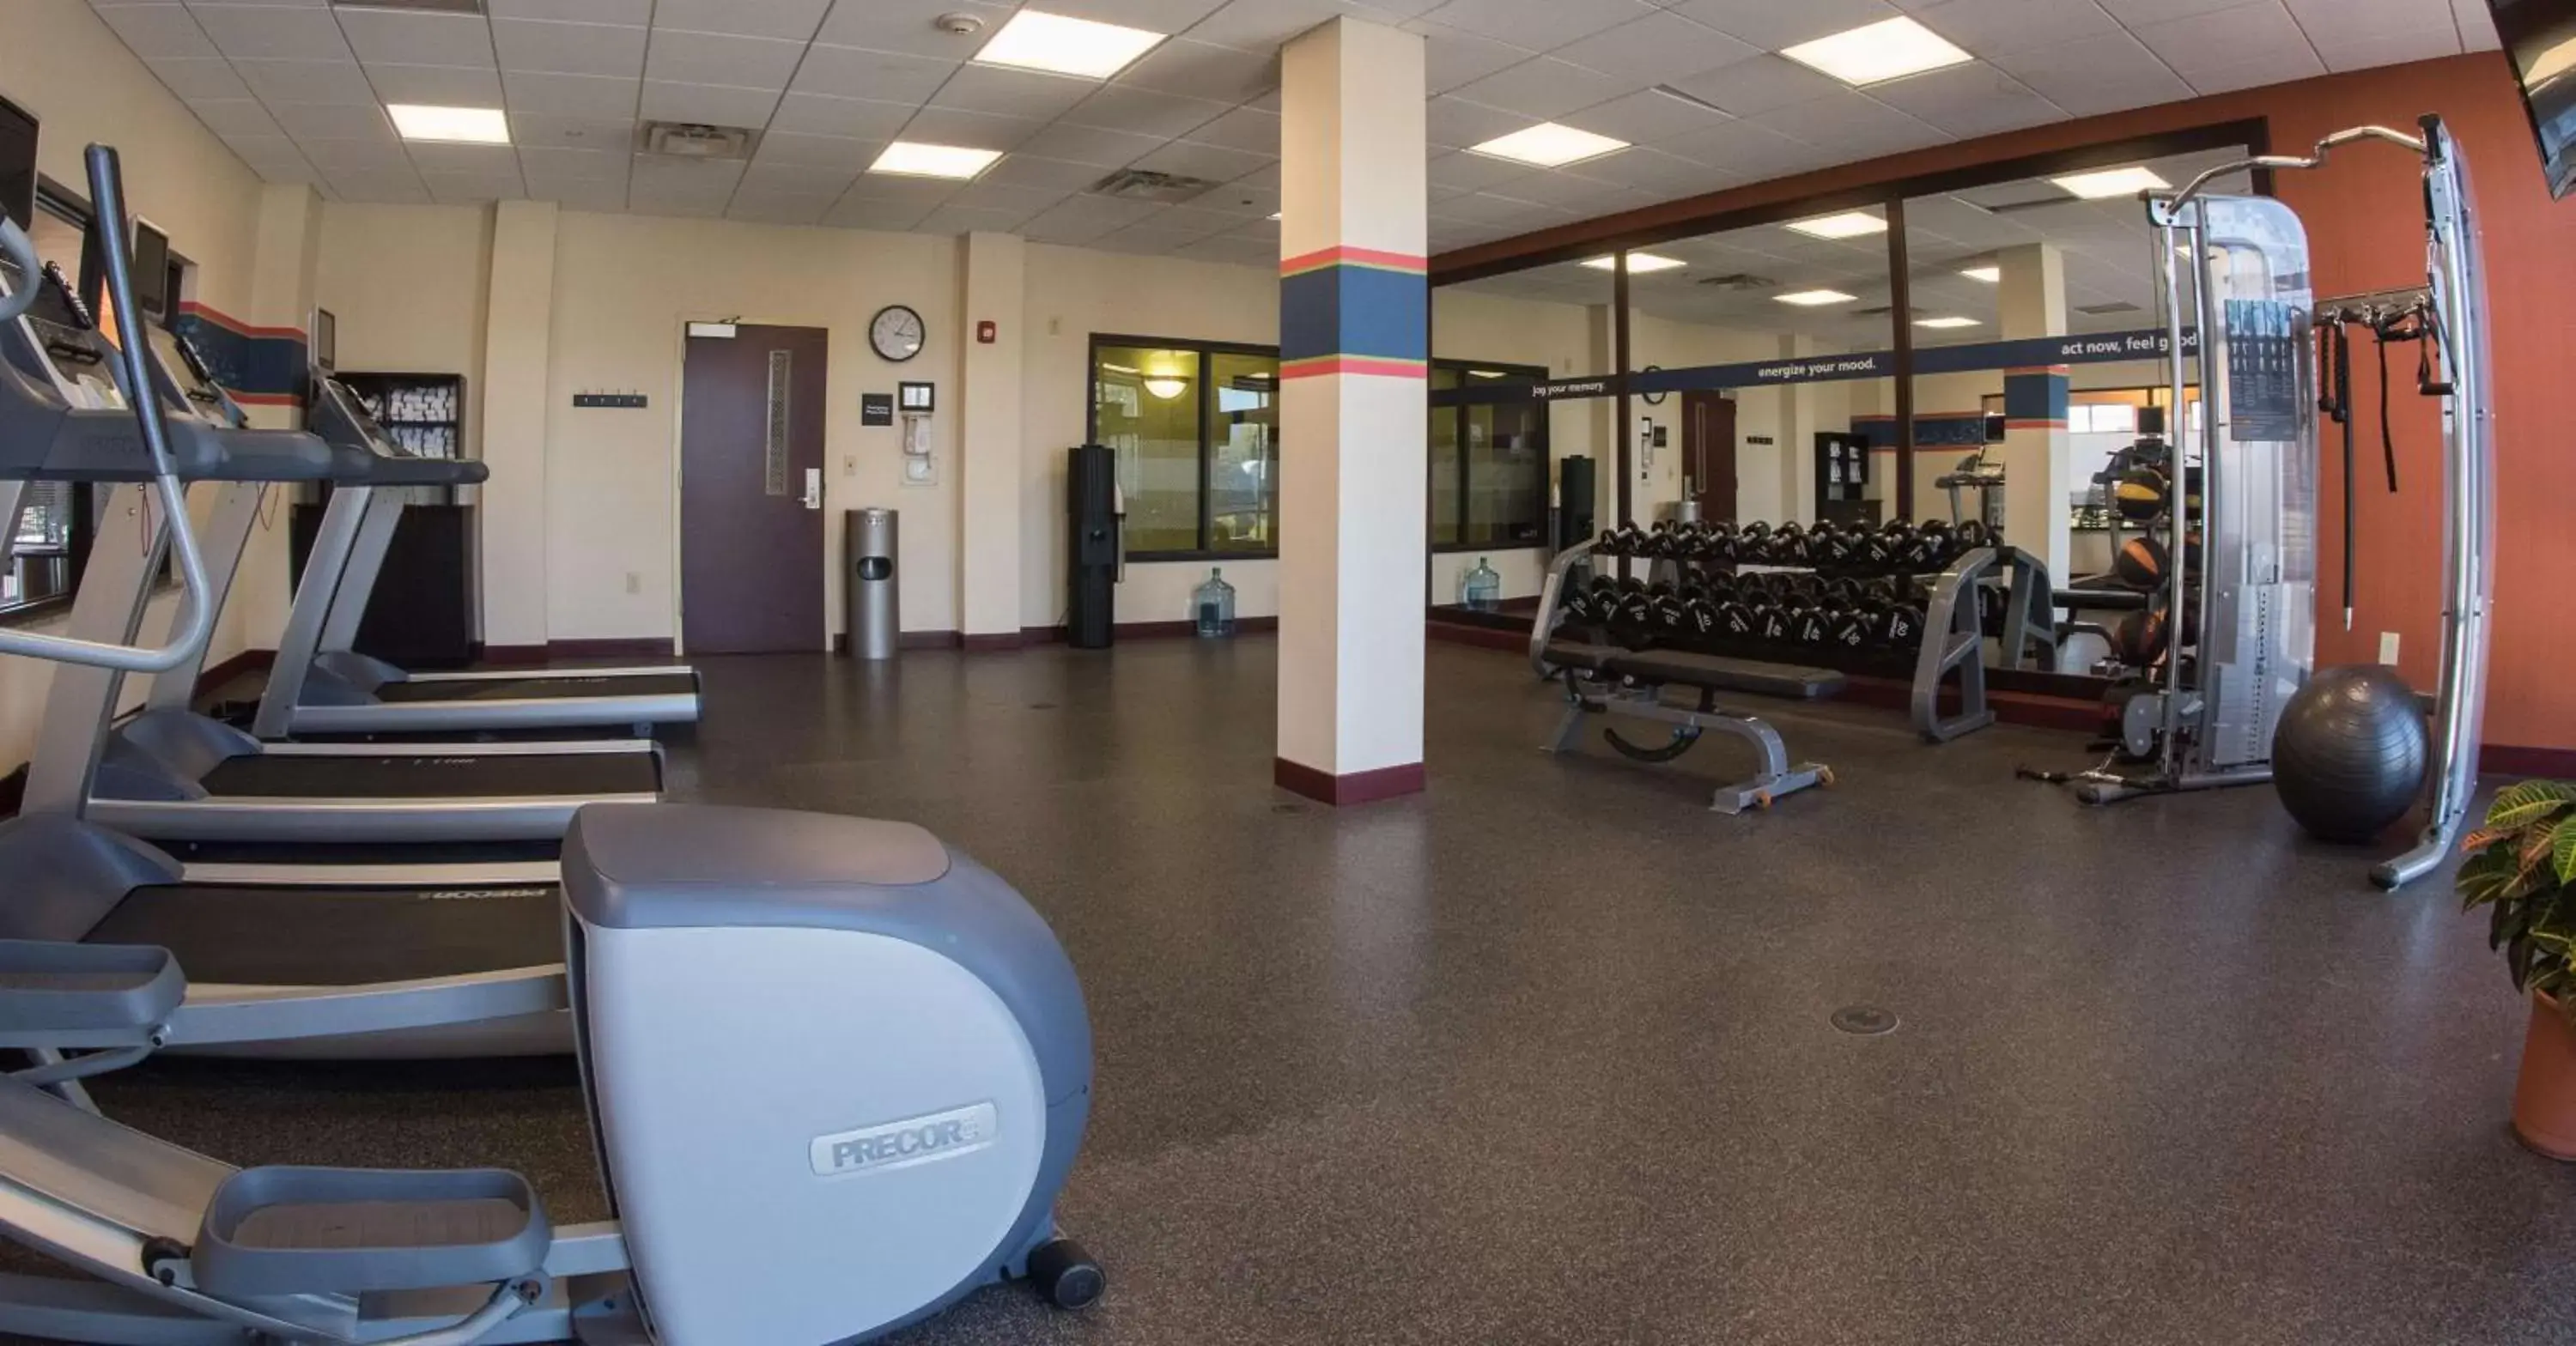 Fitness centre/facilities, Fitness Center/Facilities in Hampton Inn and Suites Woodstock, Virginia